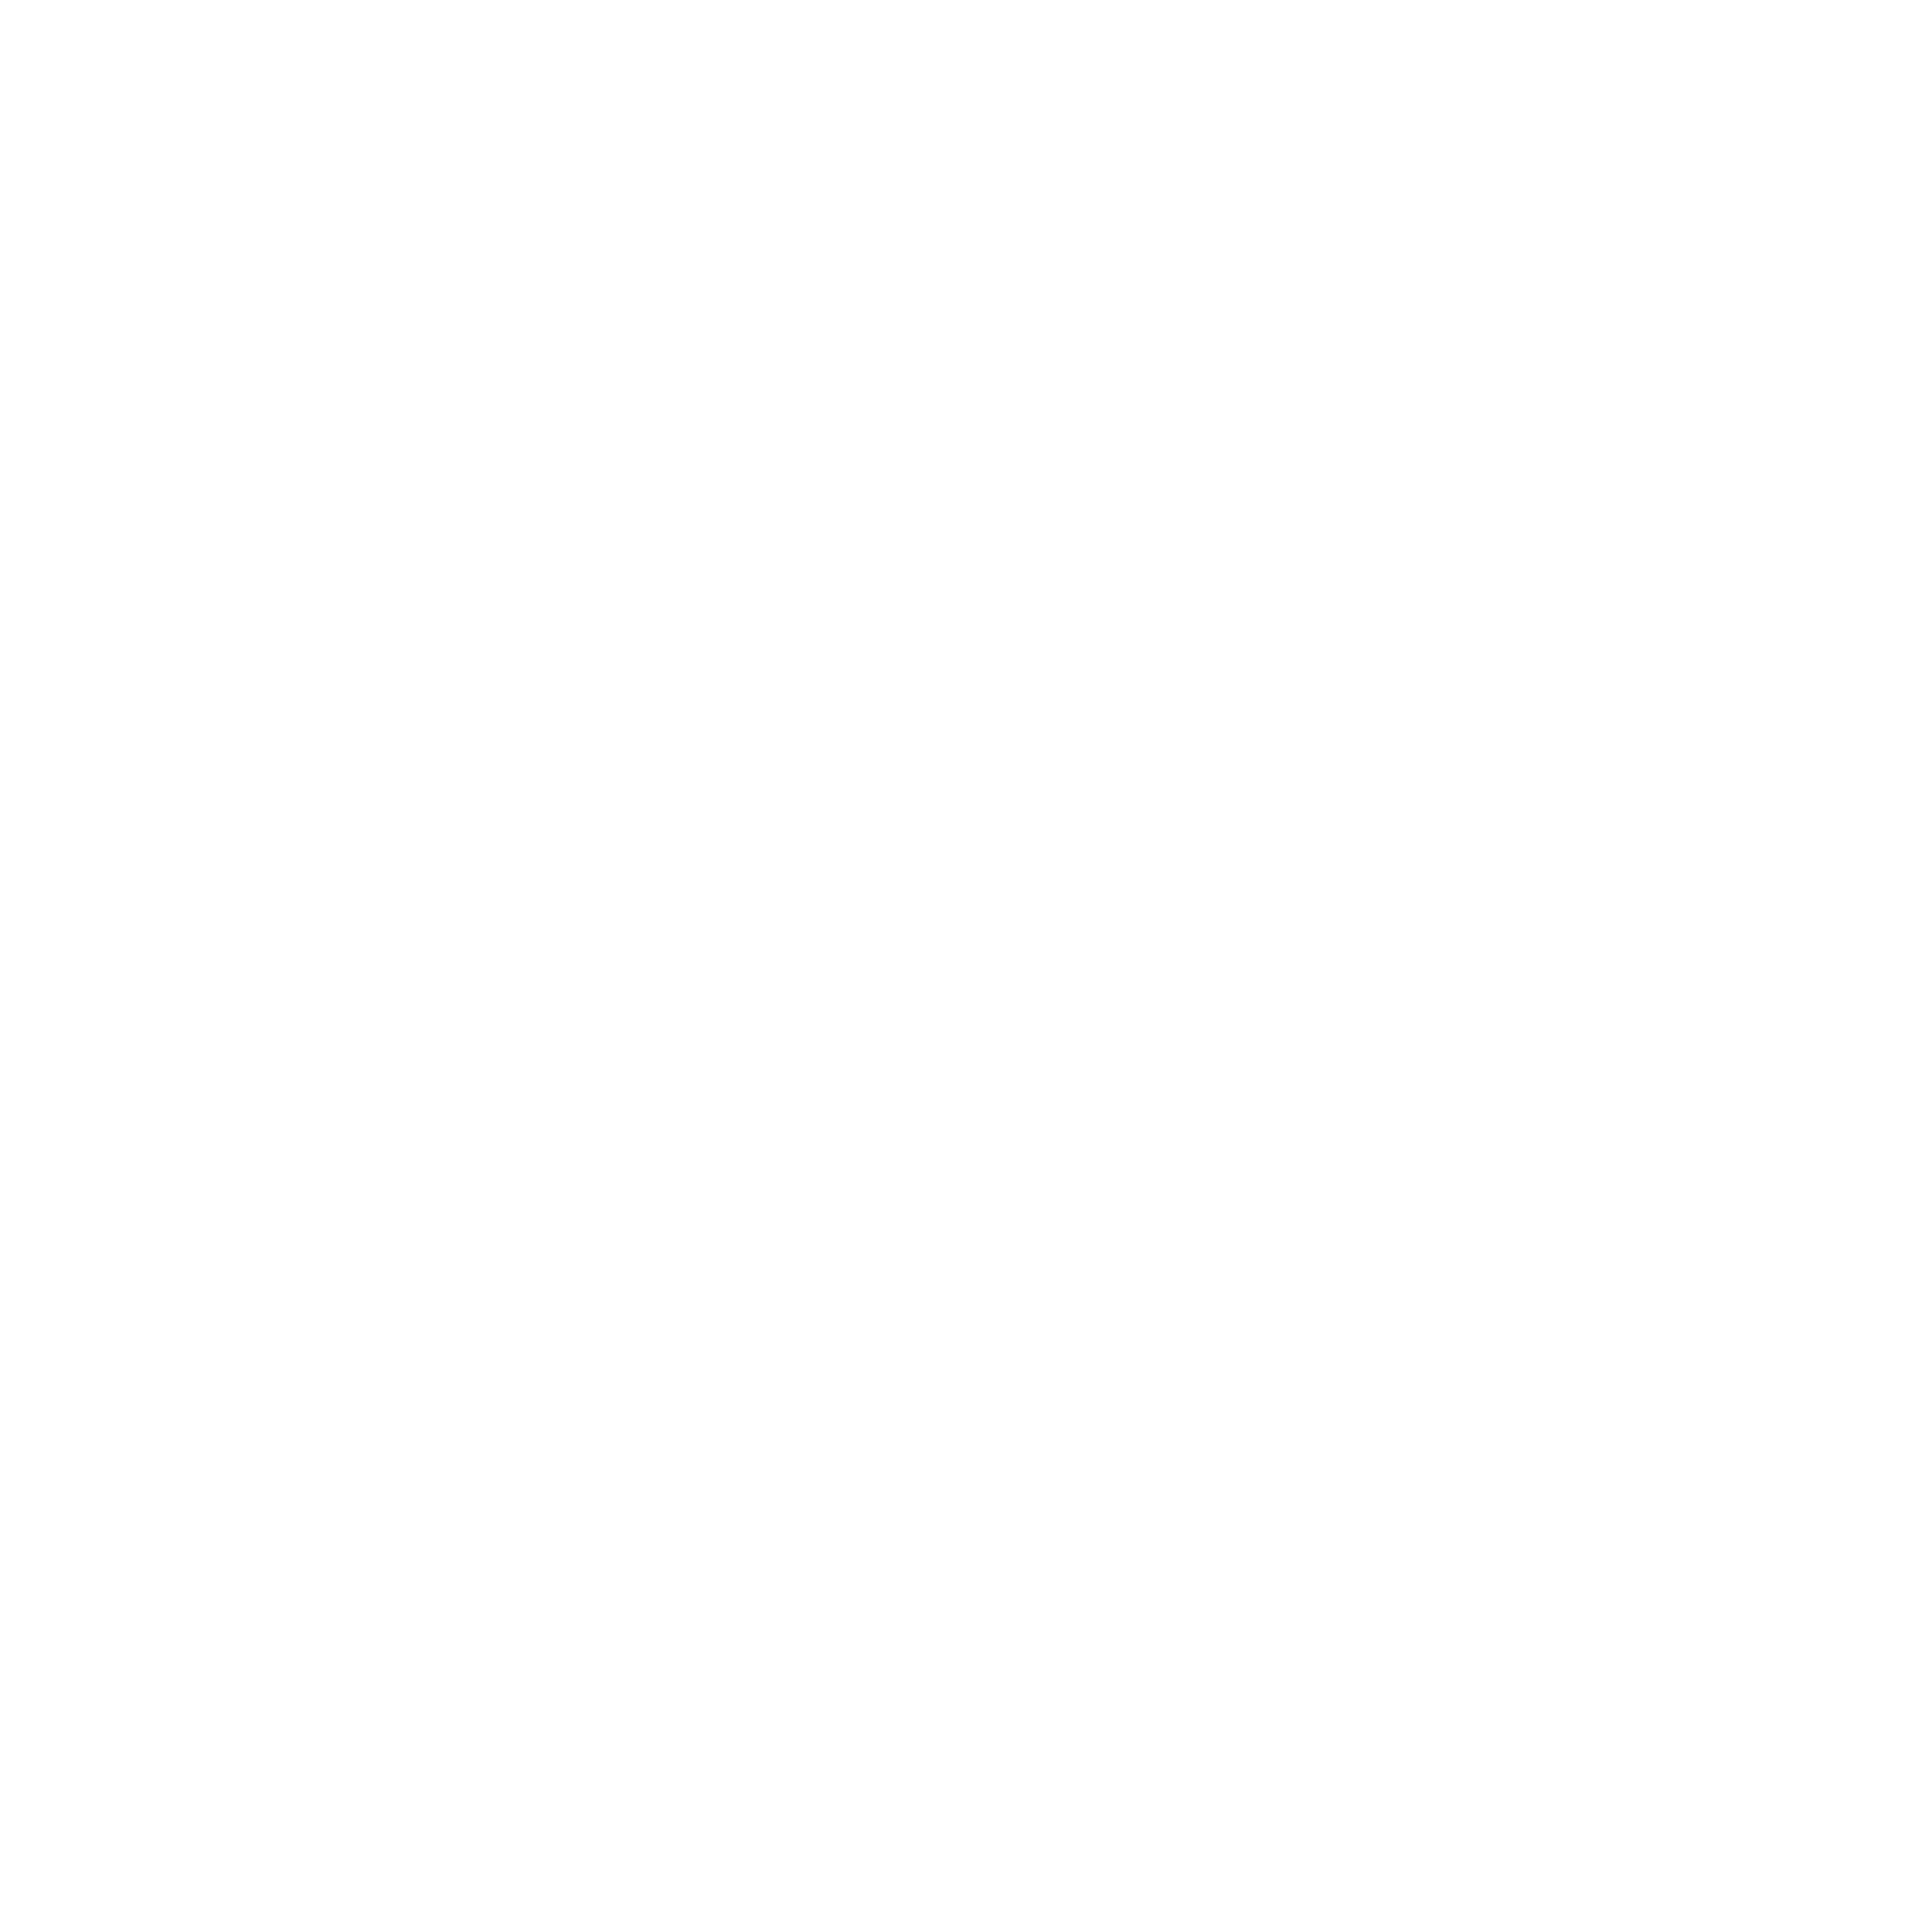 FT1000 Award